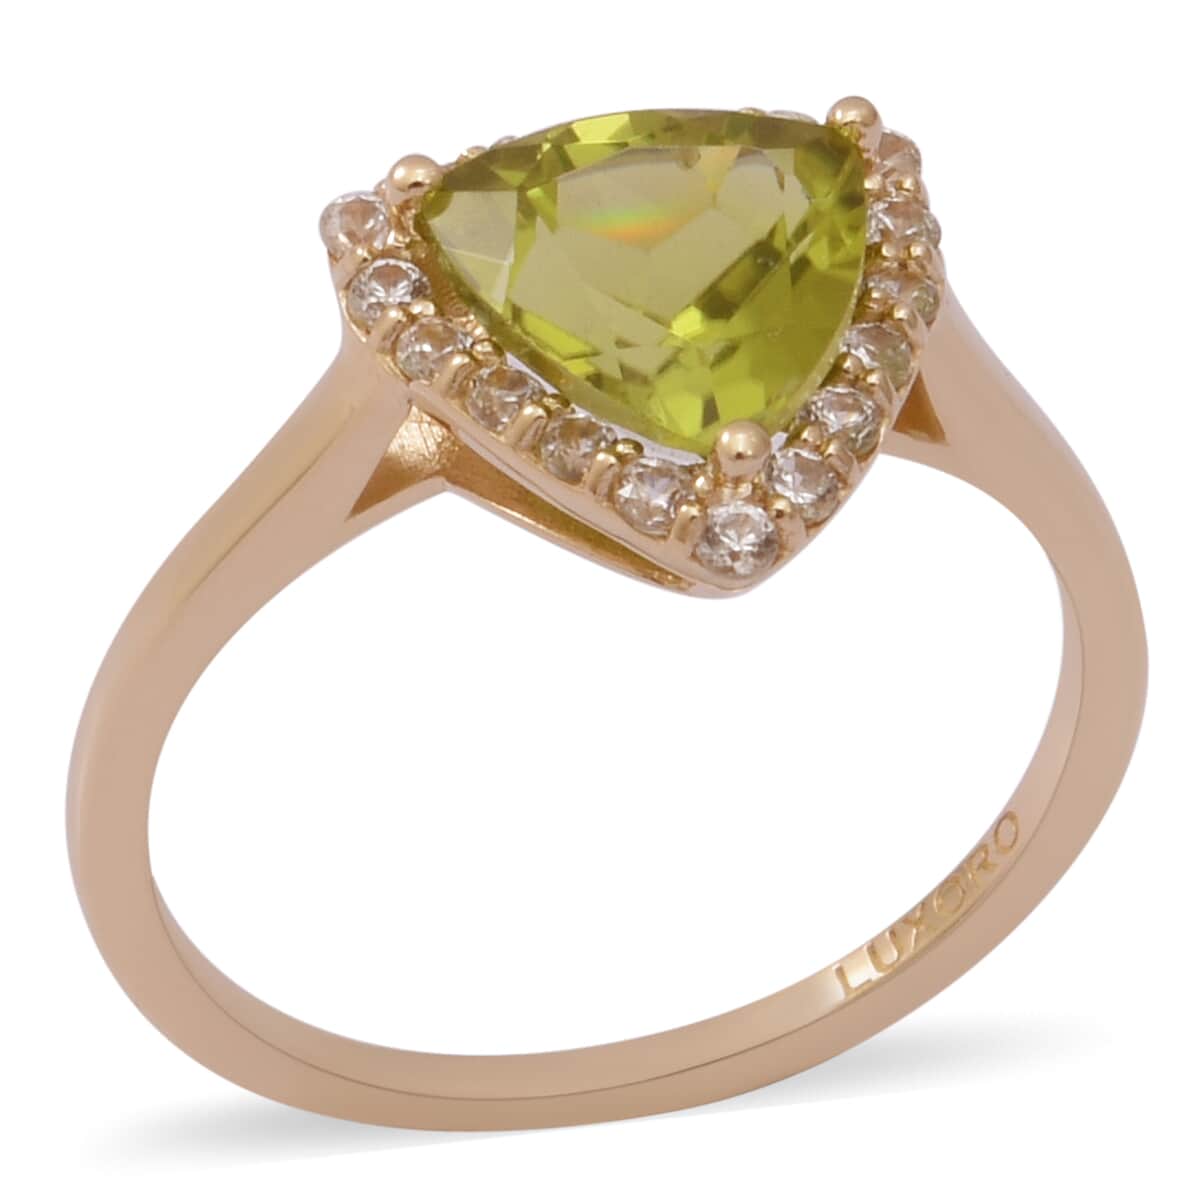 LUXORO 10K Yellow Gold Premium Peridot and White Zircon Halo Ring (Size 7.0) 2.30 ctw image number 2